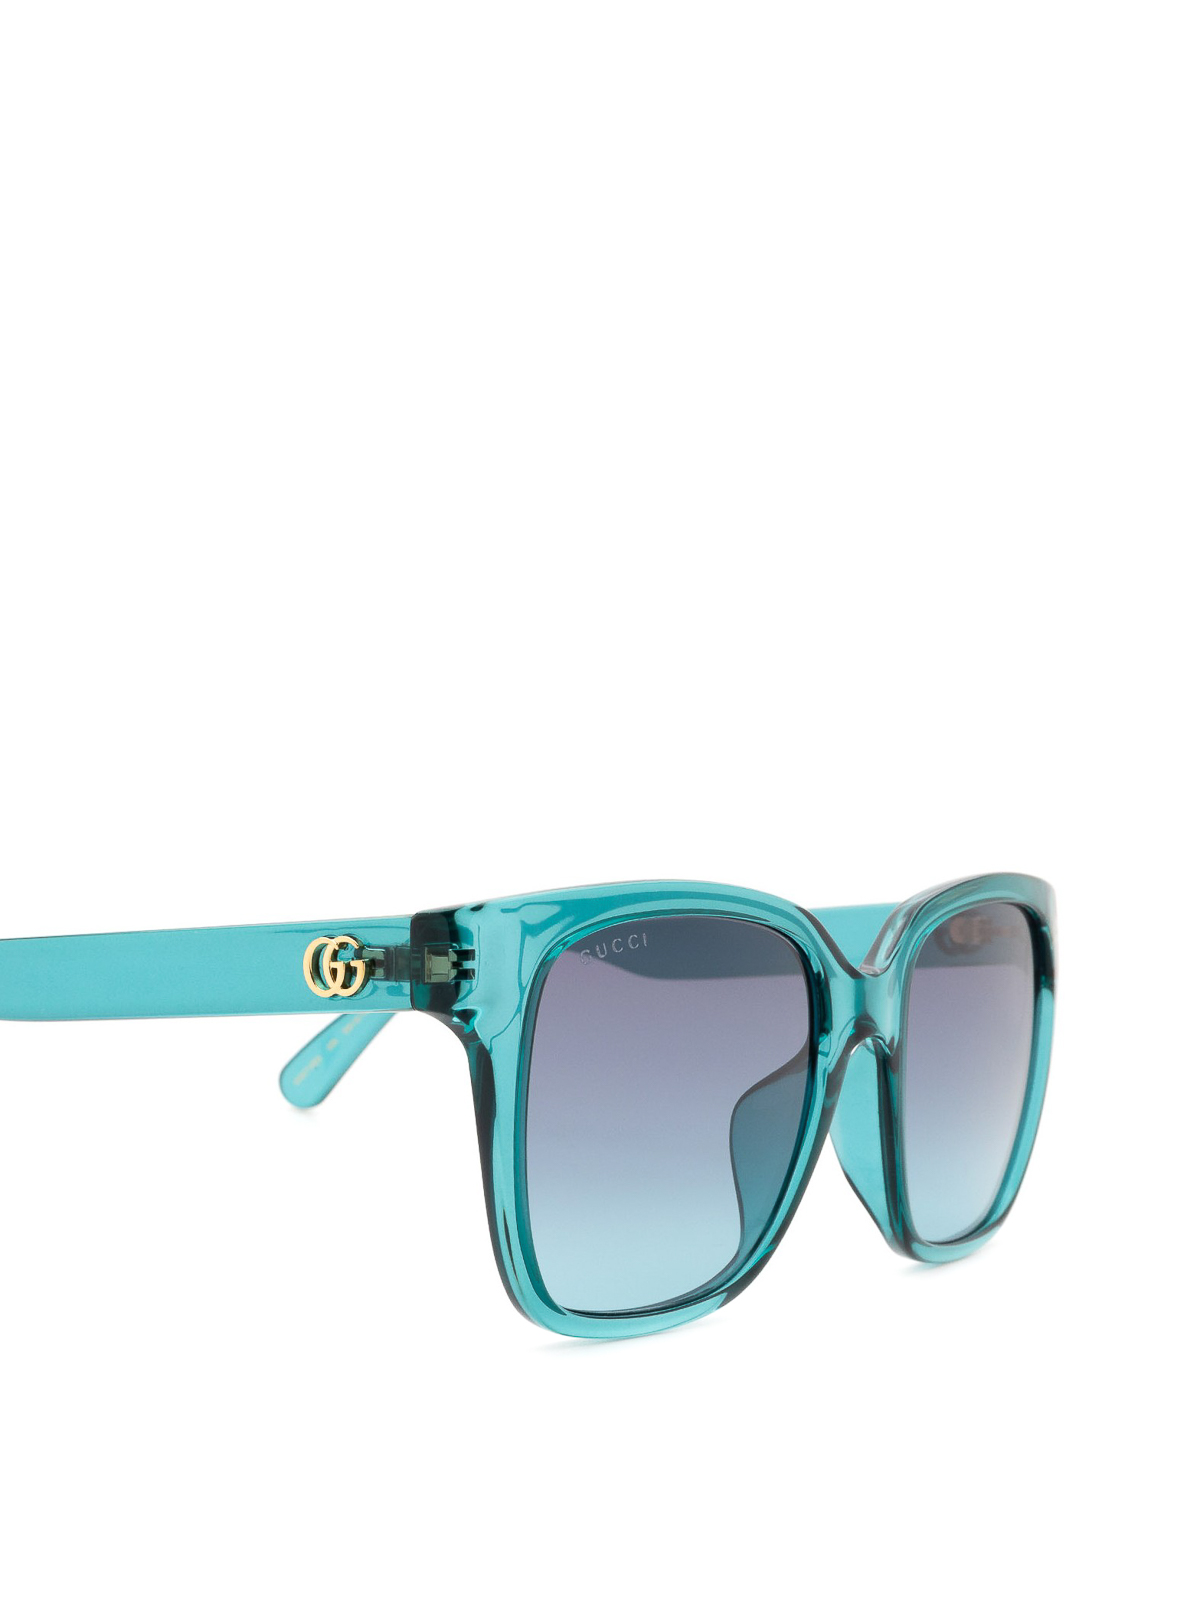 gucci turquoise sunglasses